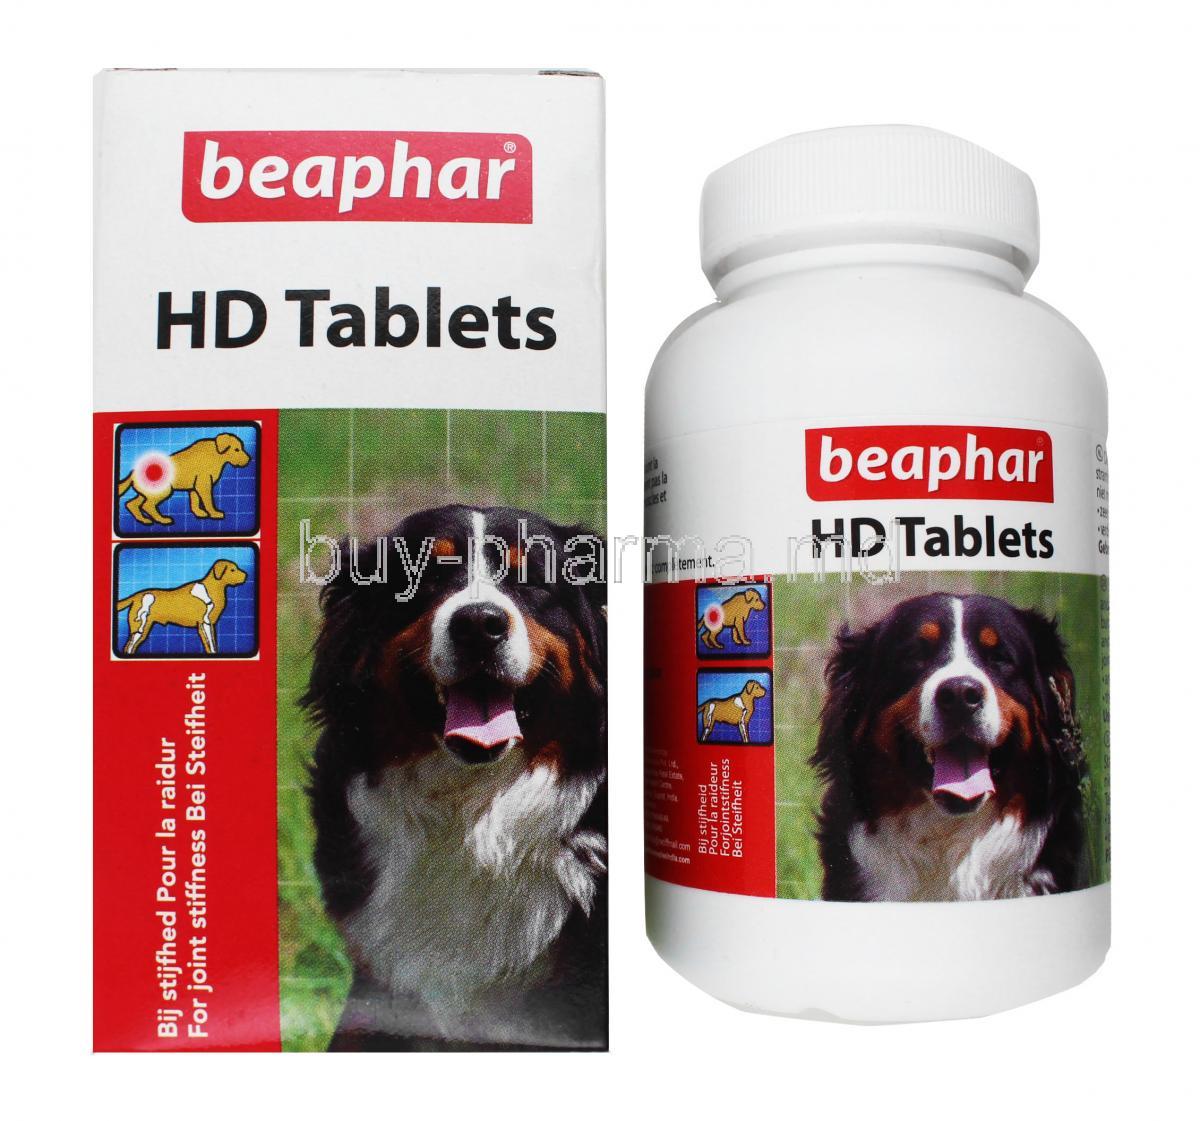 Beaphar HD box and tablet bottle